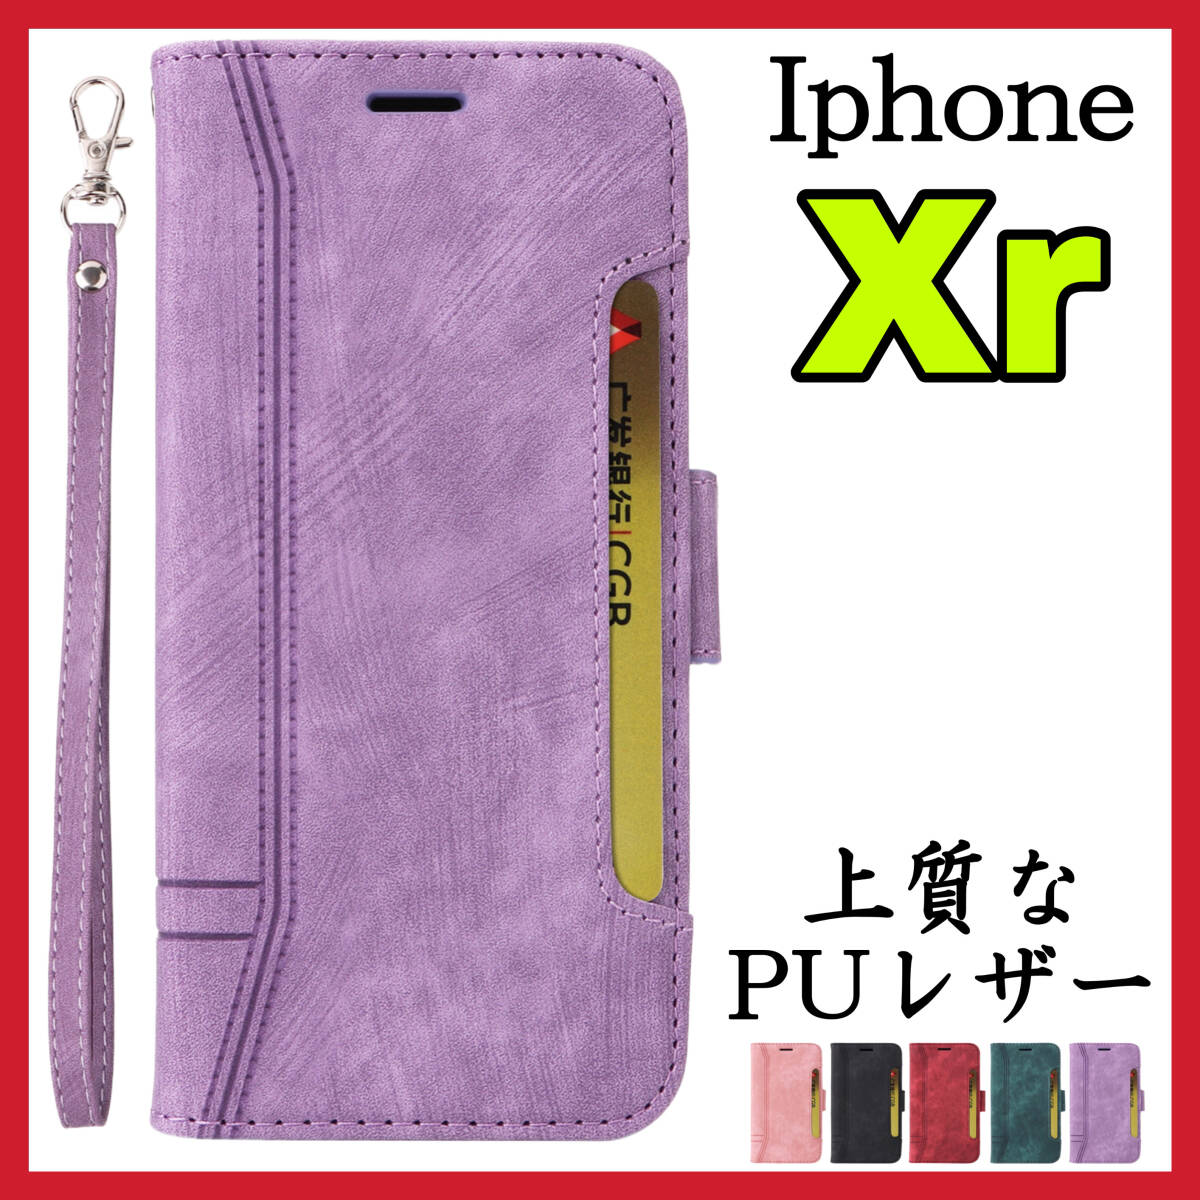 IphoneXRケース 手帳型 紫色 高級感 上質PUレザー アイホンXRカバー パープル スピード発送 耐衝撃 お洒落 カード収納